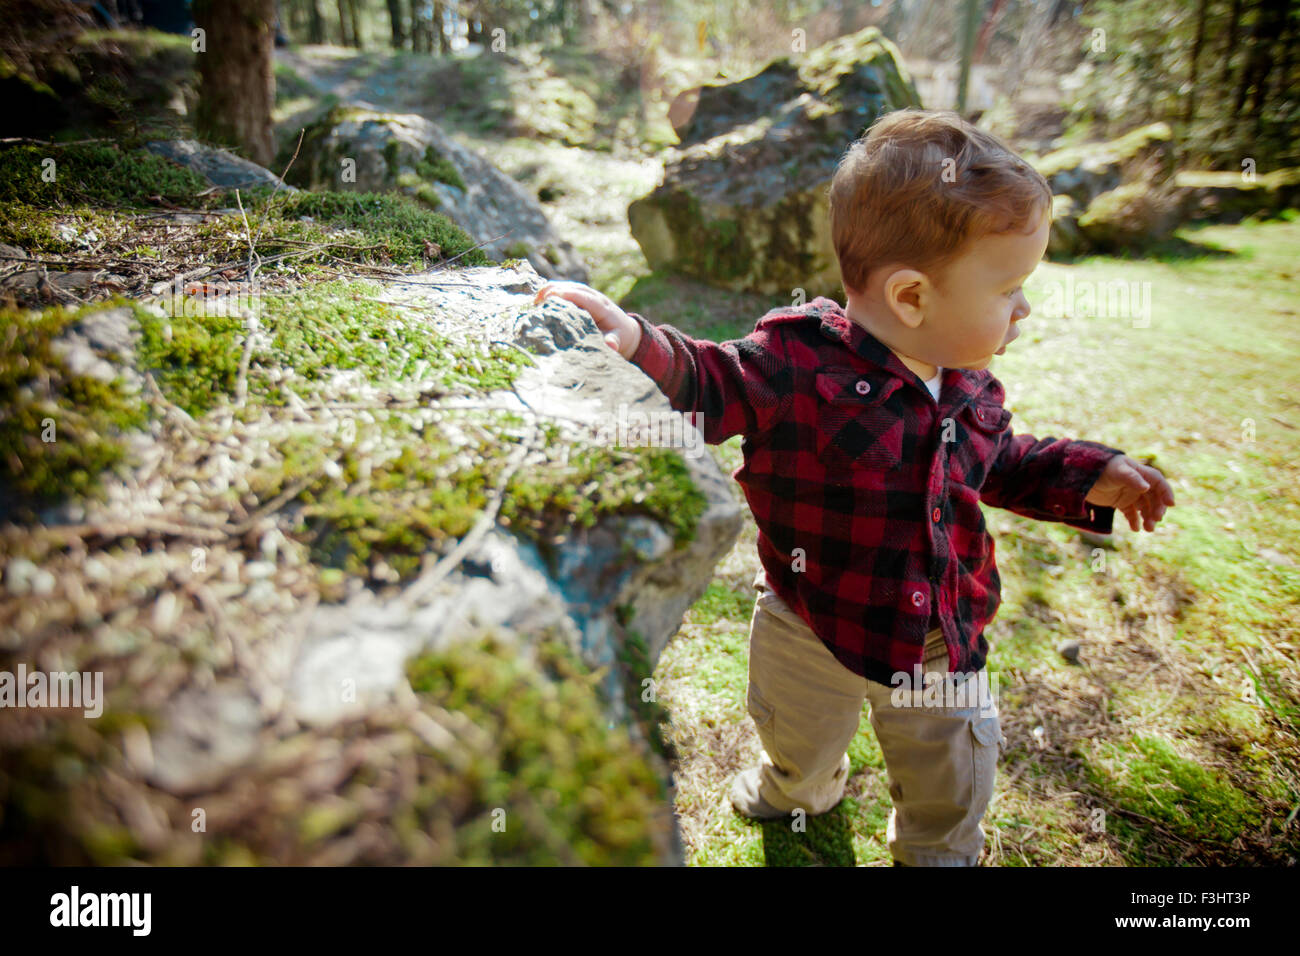 Young boy exploring nature Stock Photo